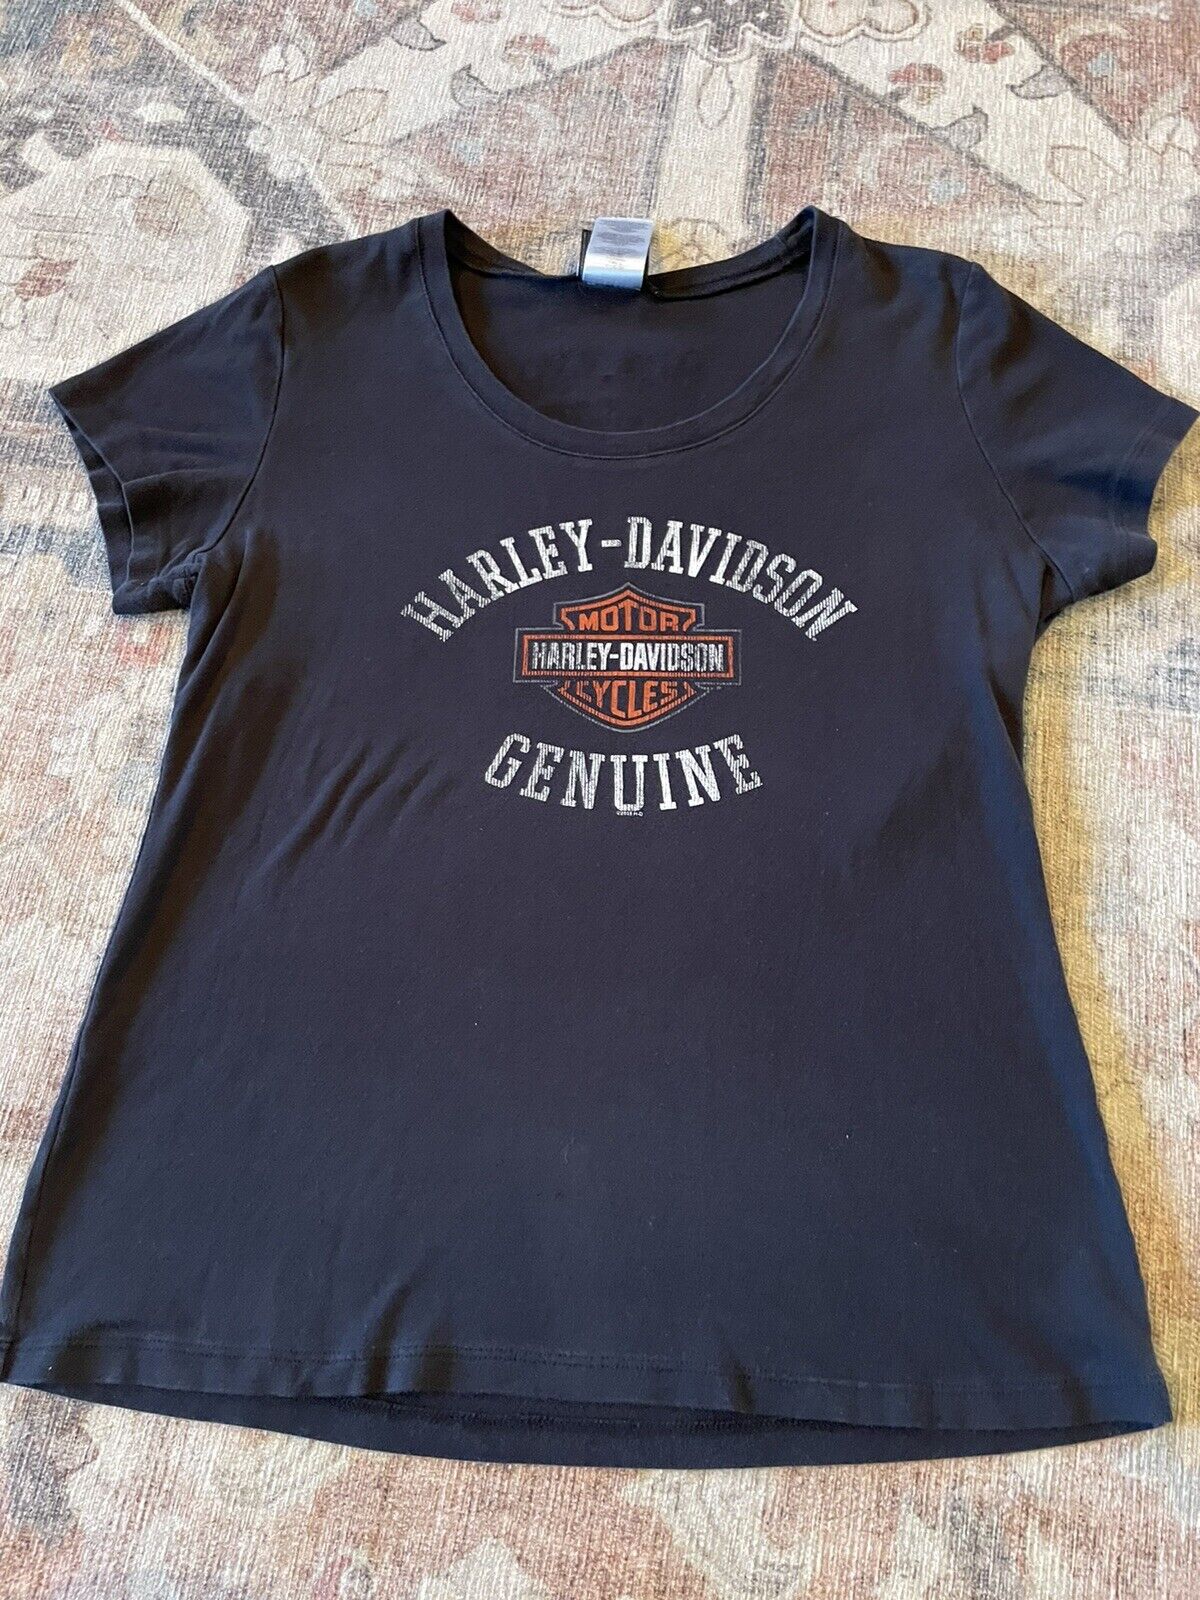 Harley Davidson Route 66 Tulsa, OK womens black tshirt size XL